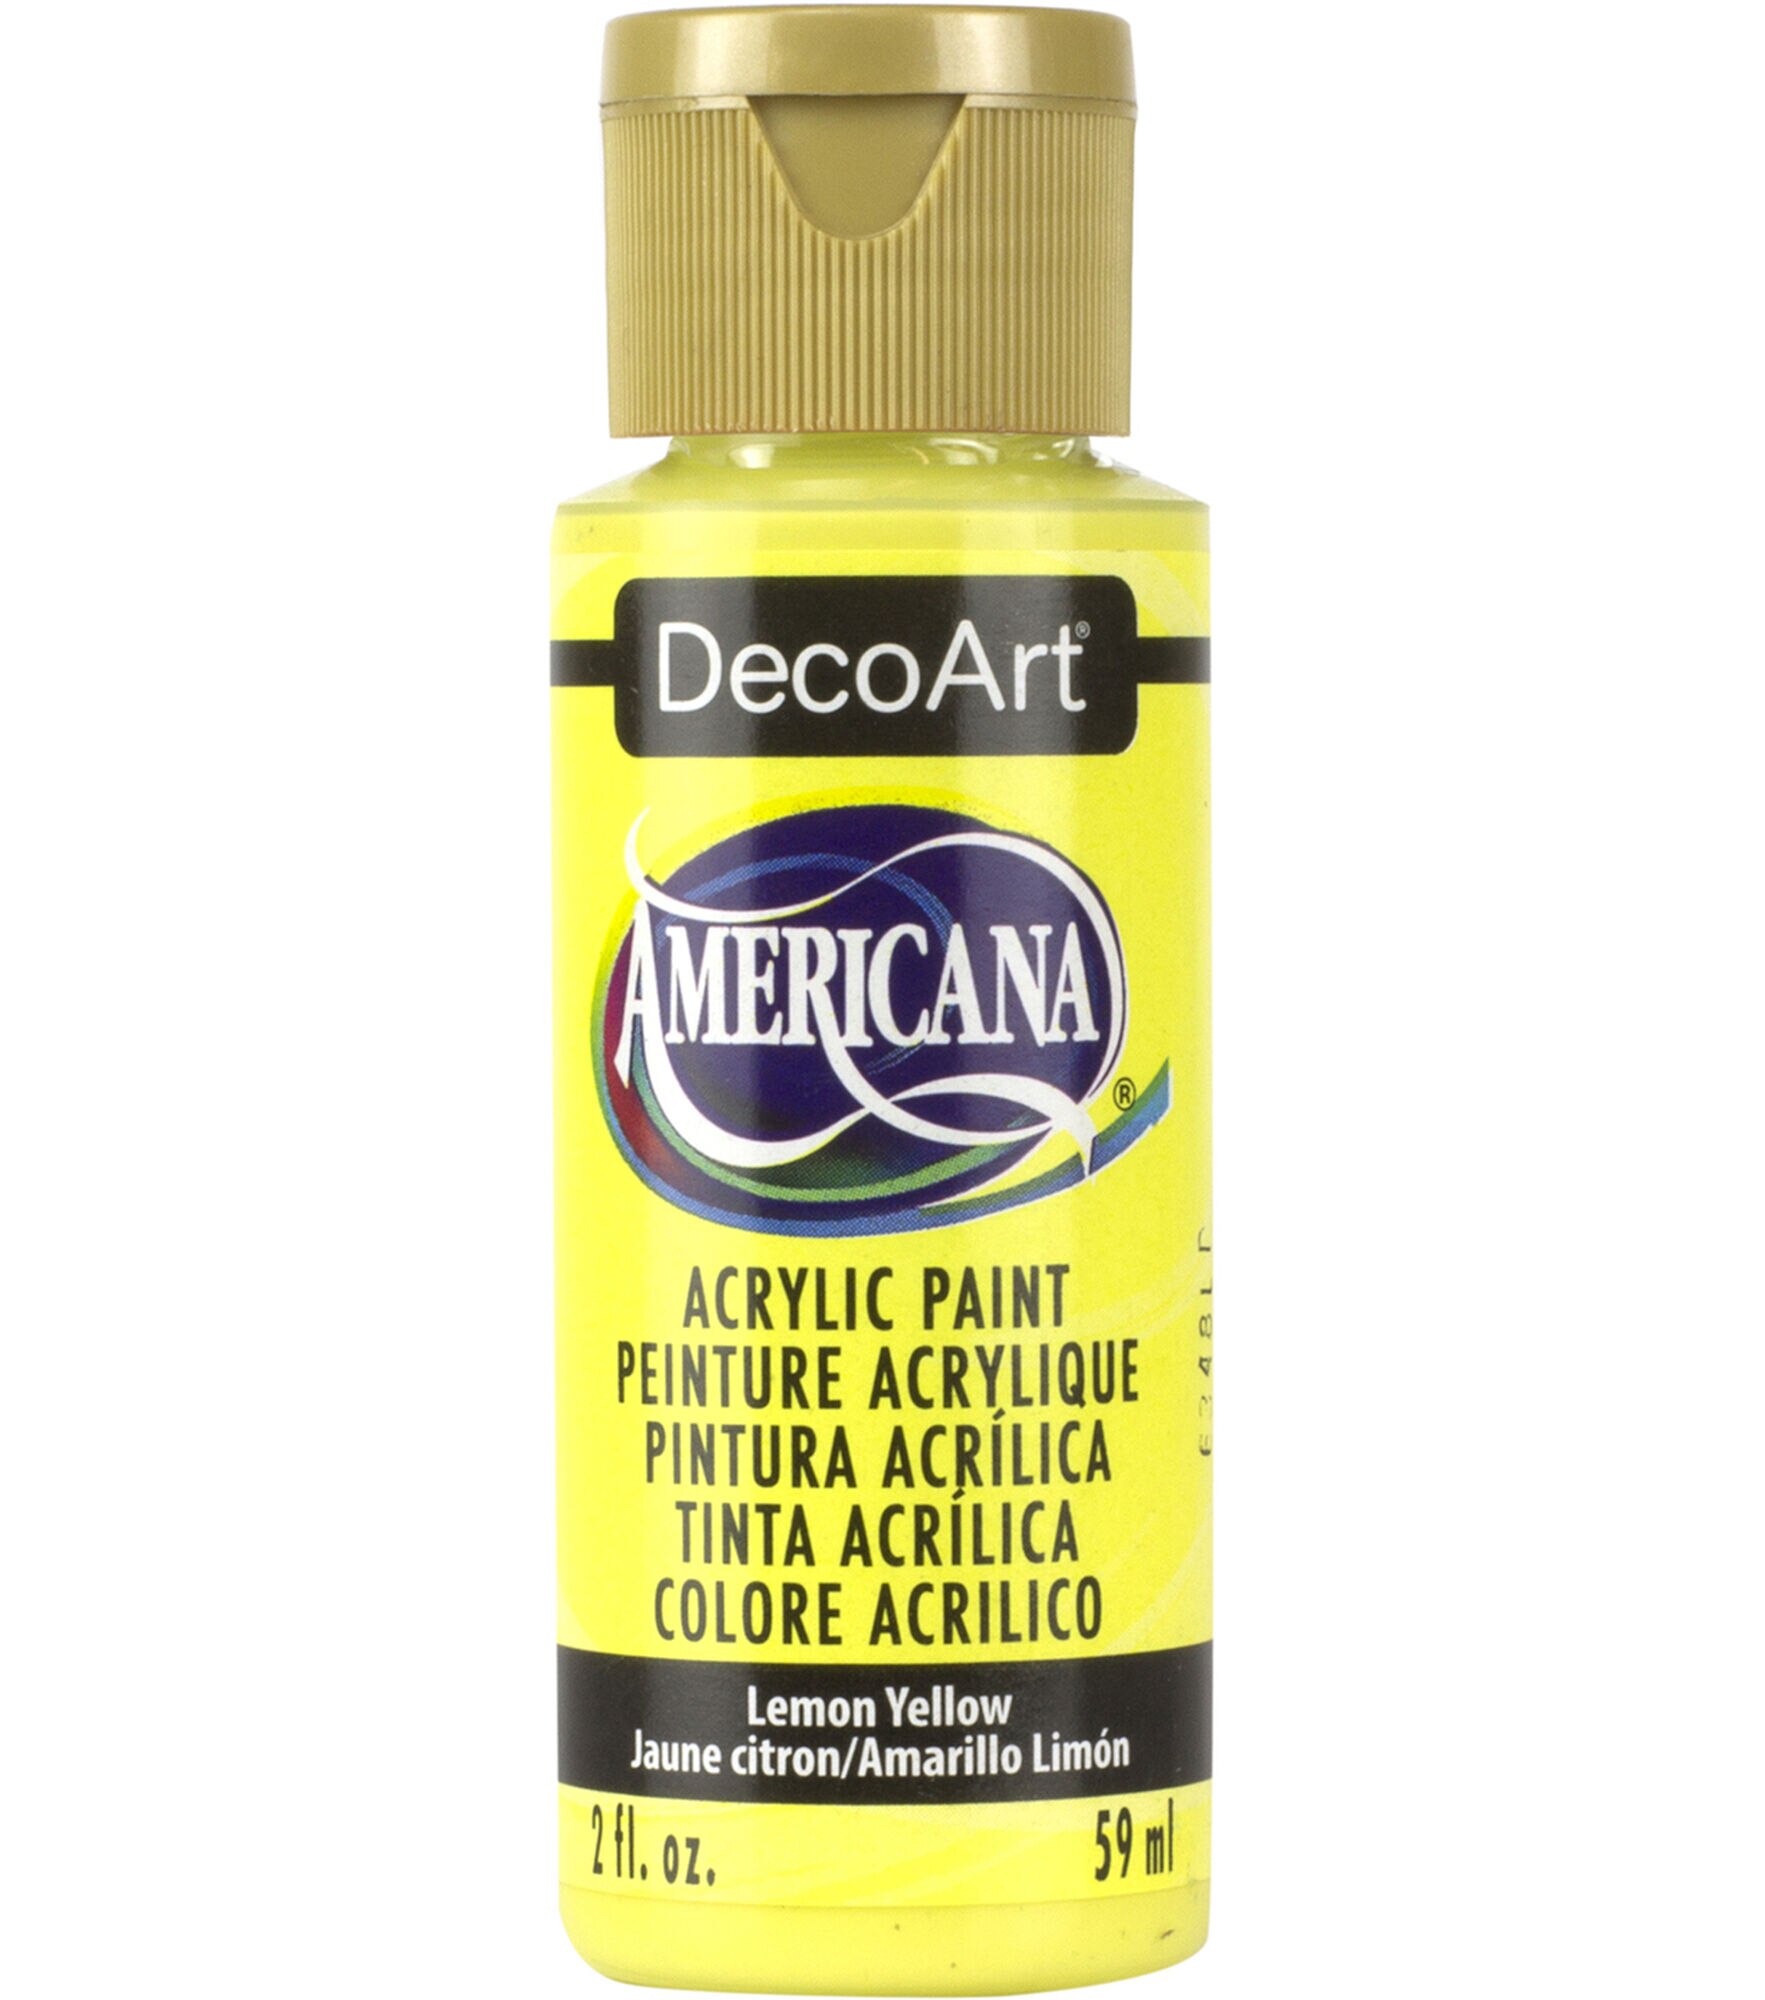 DecoArt Americana Acrylic 2oz Paint, Lemon Yellow, hi-res